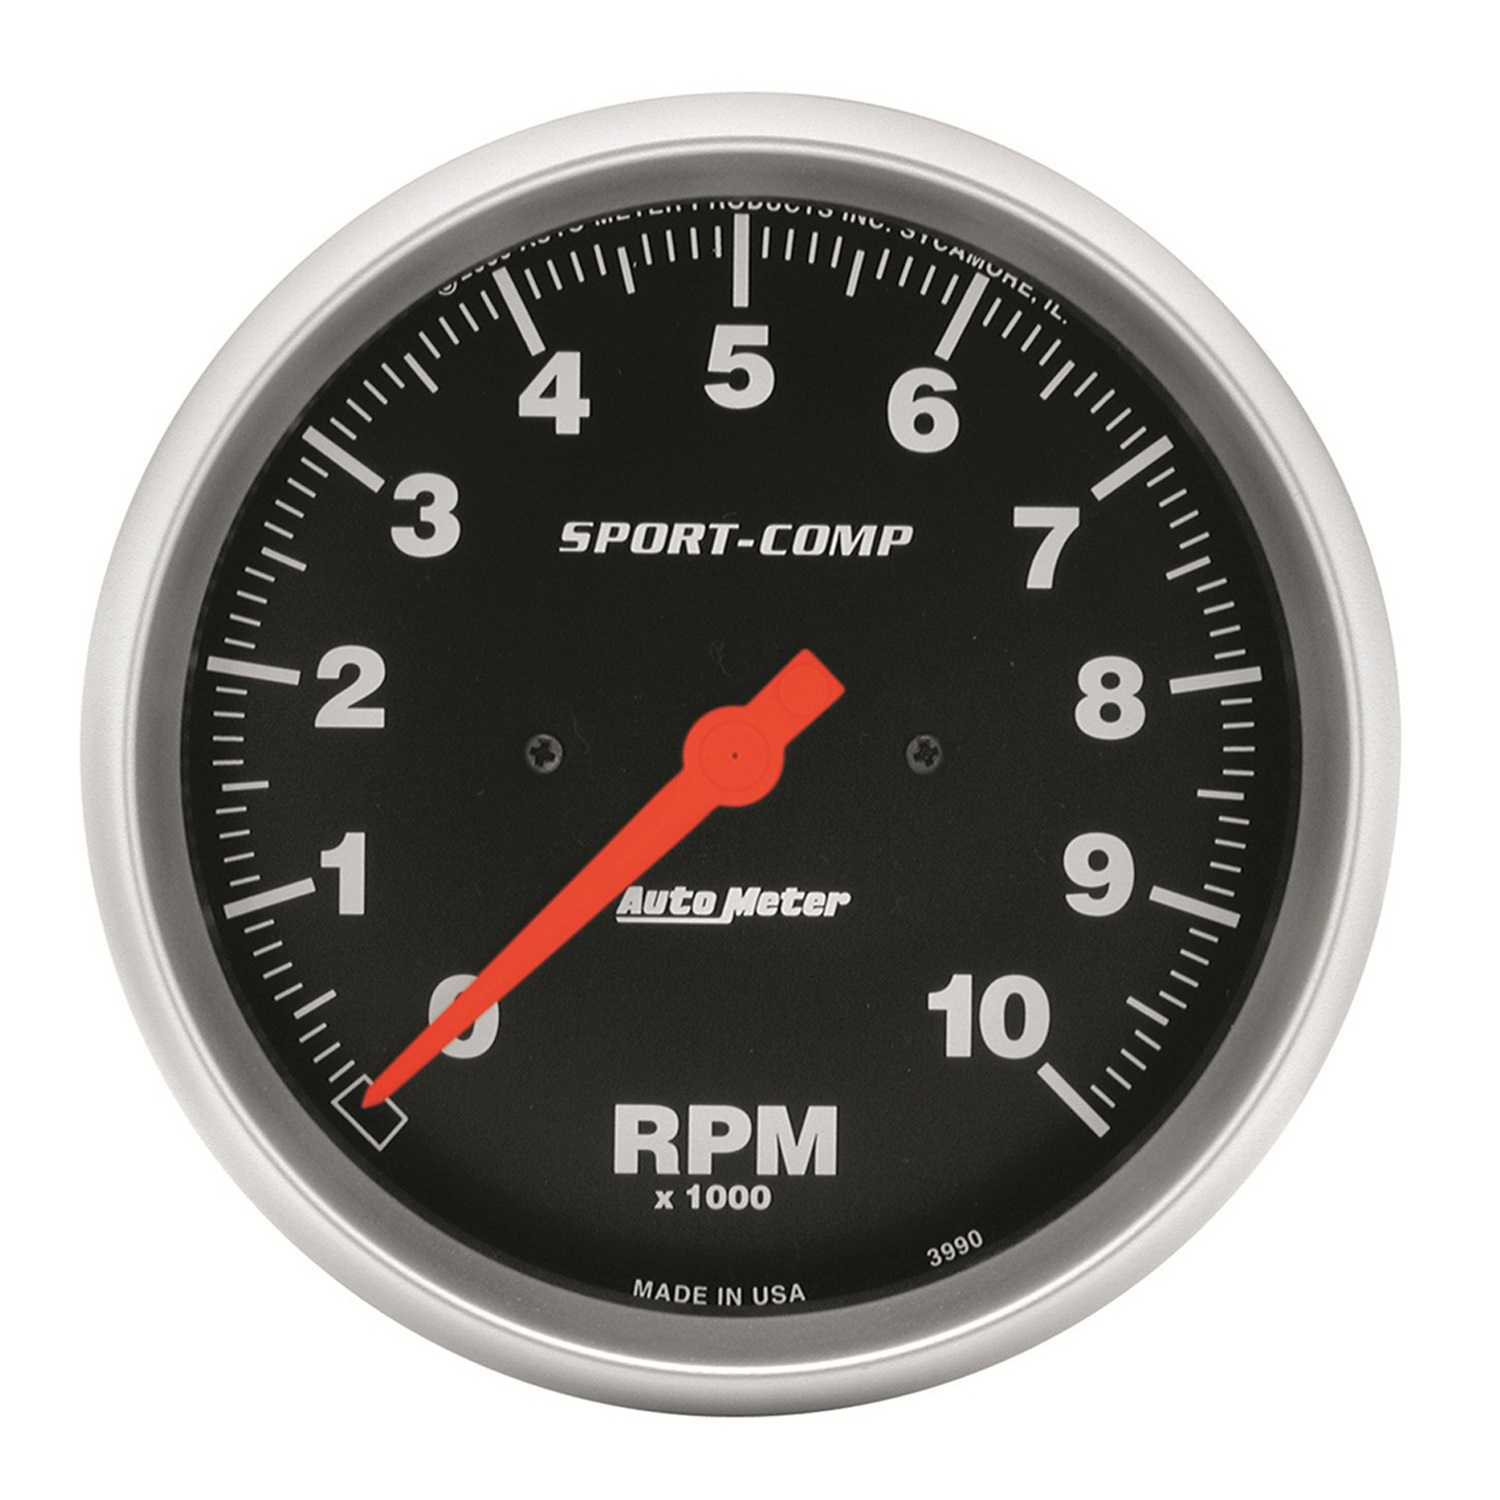 Auto Meter Auto Meter 3990 Sport-Comp; In-Dash Electric Tachometer